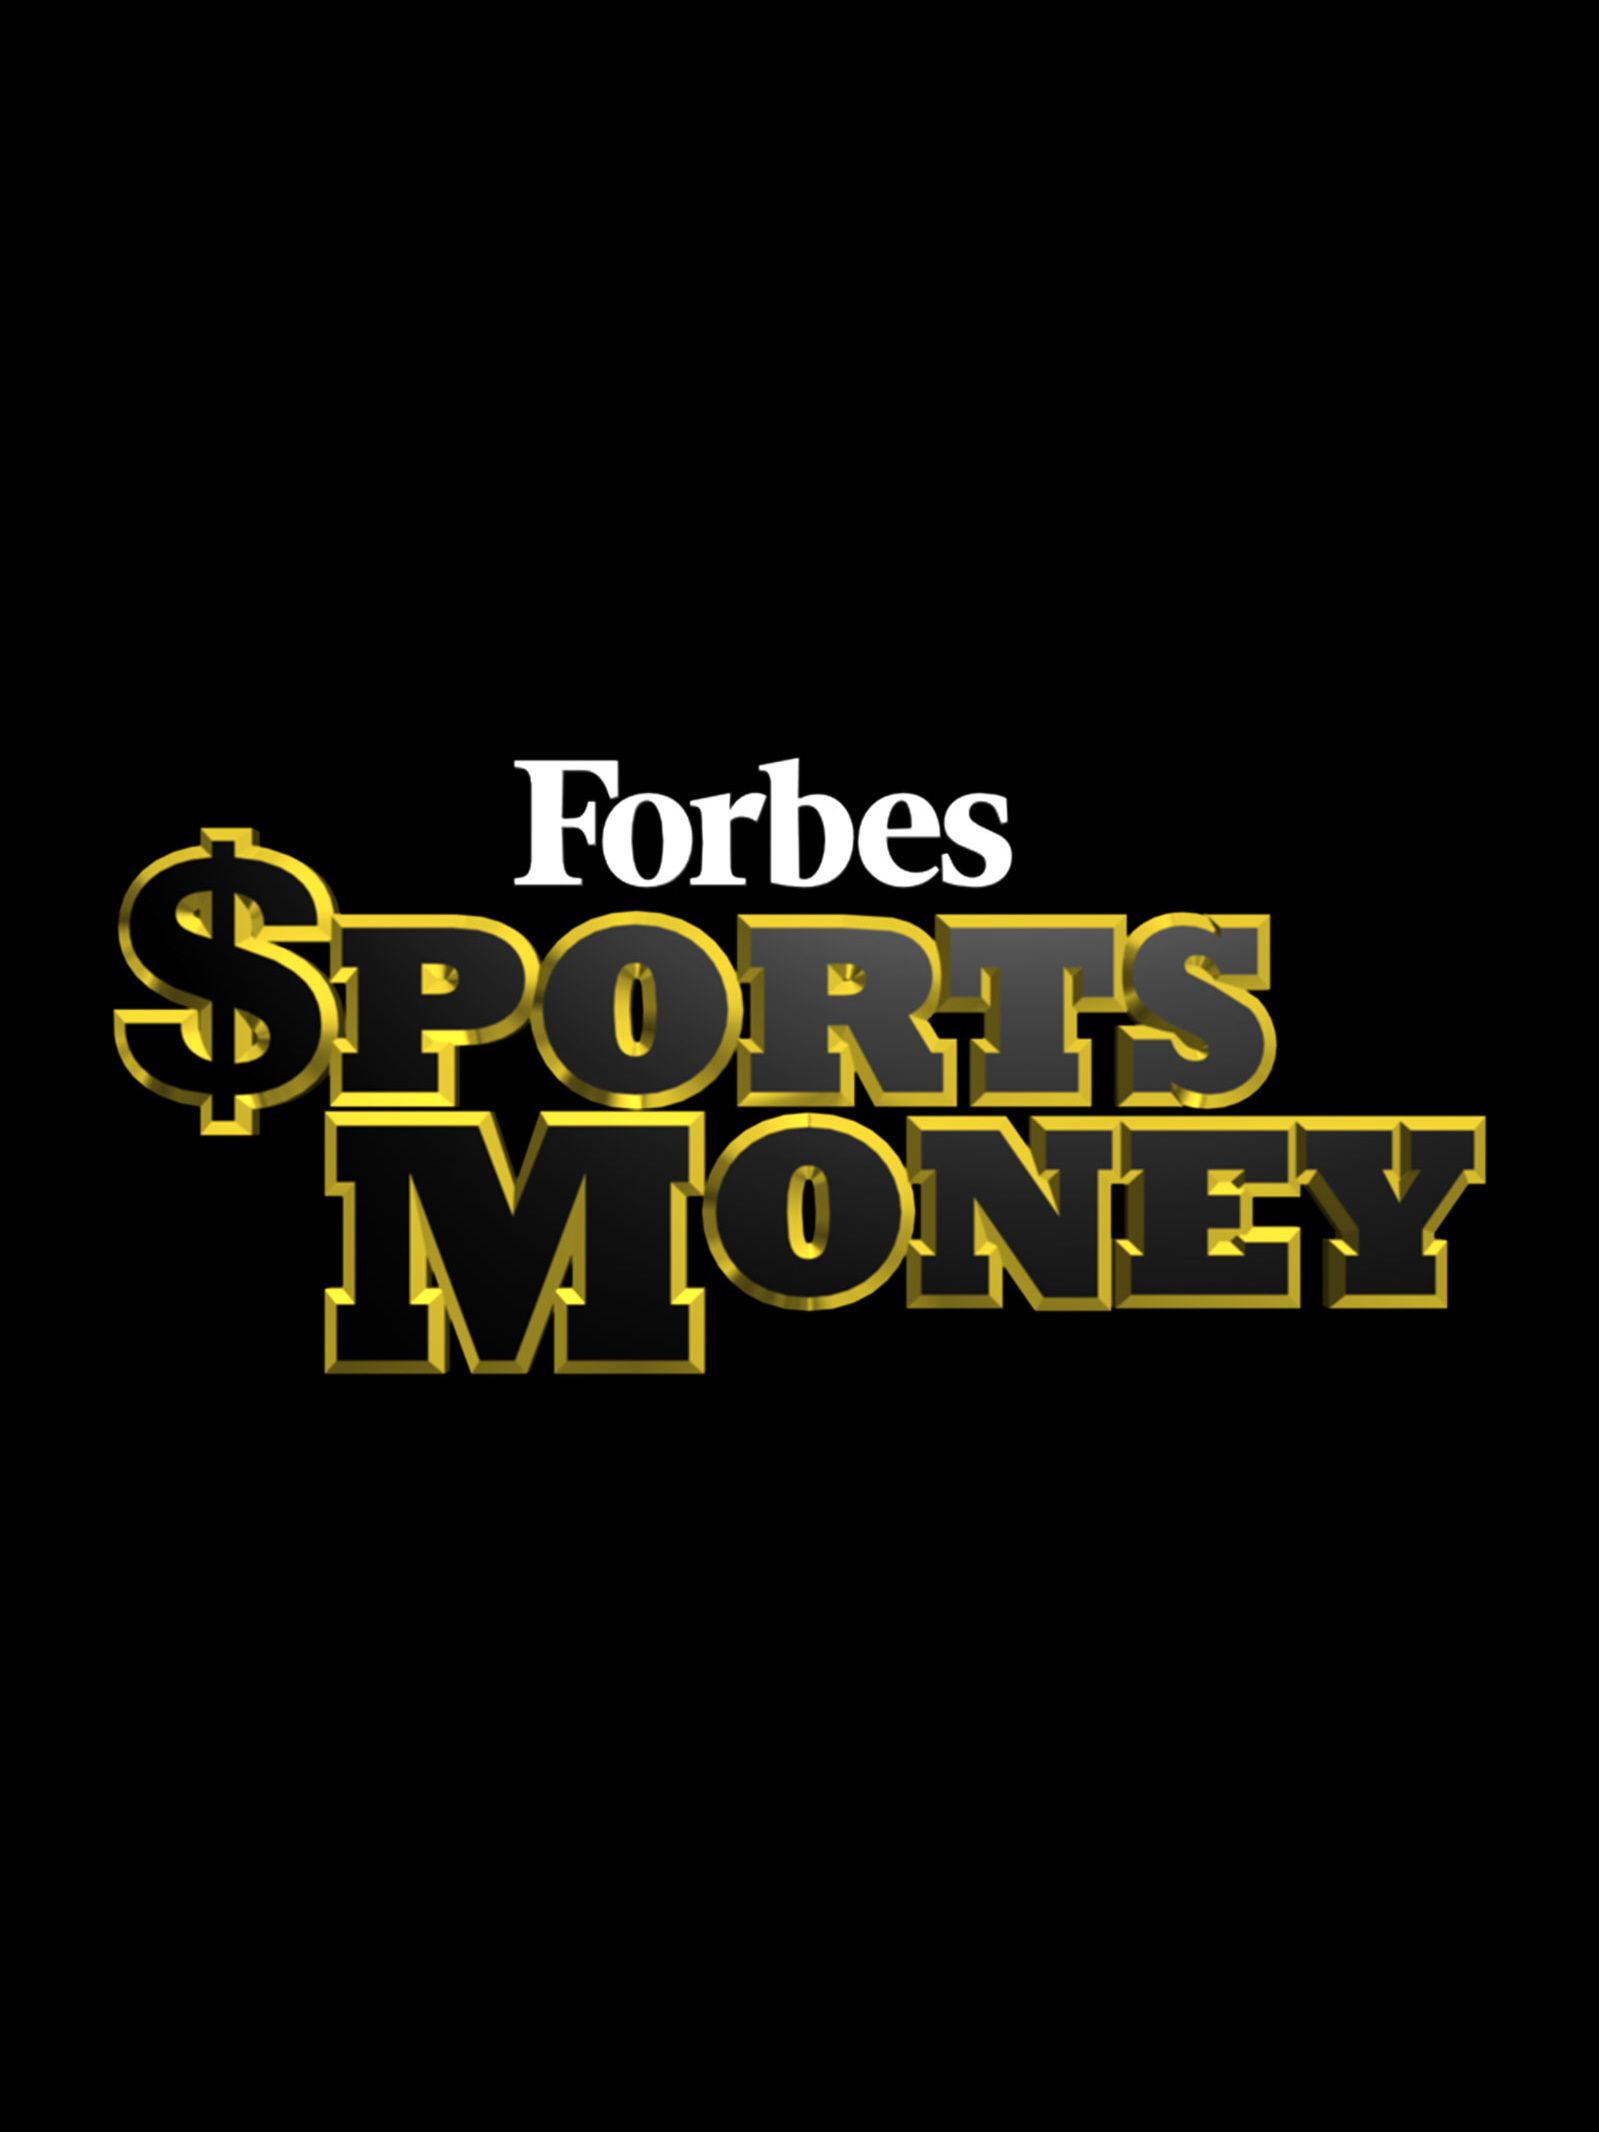 ForbesSportsmoney.jpg